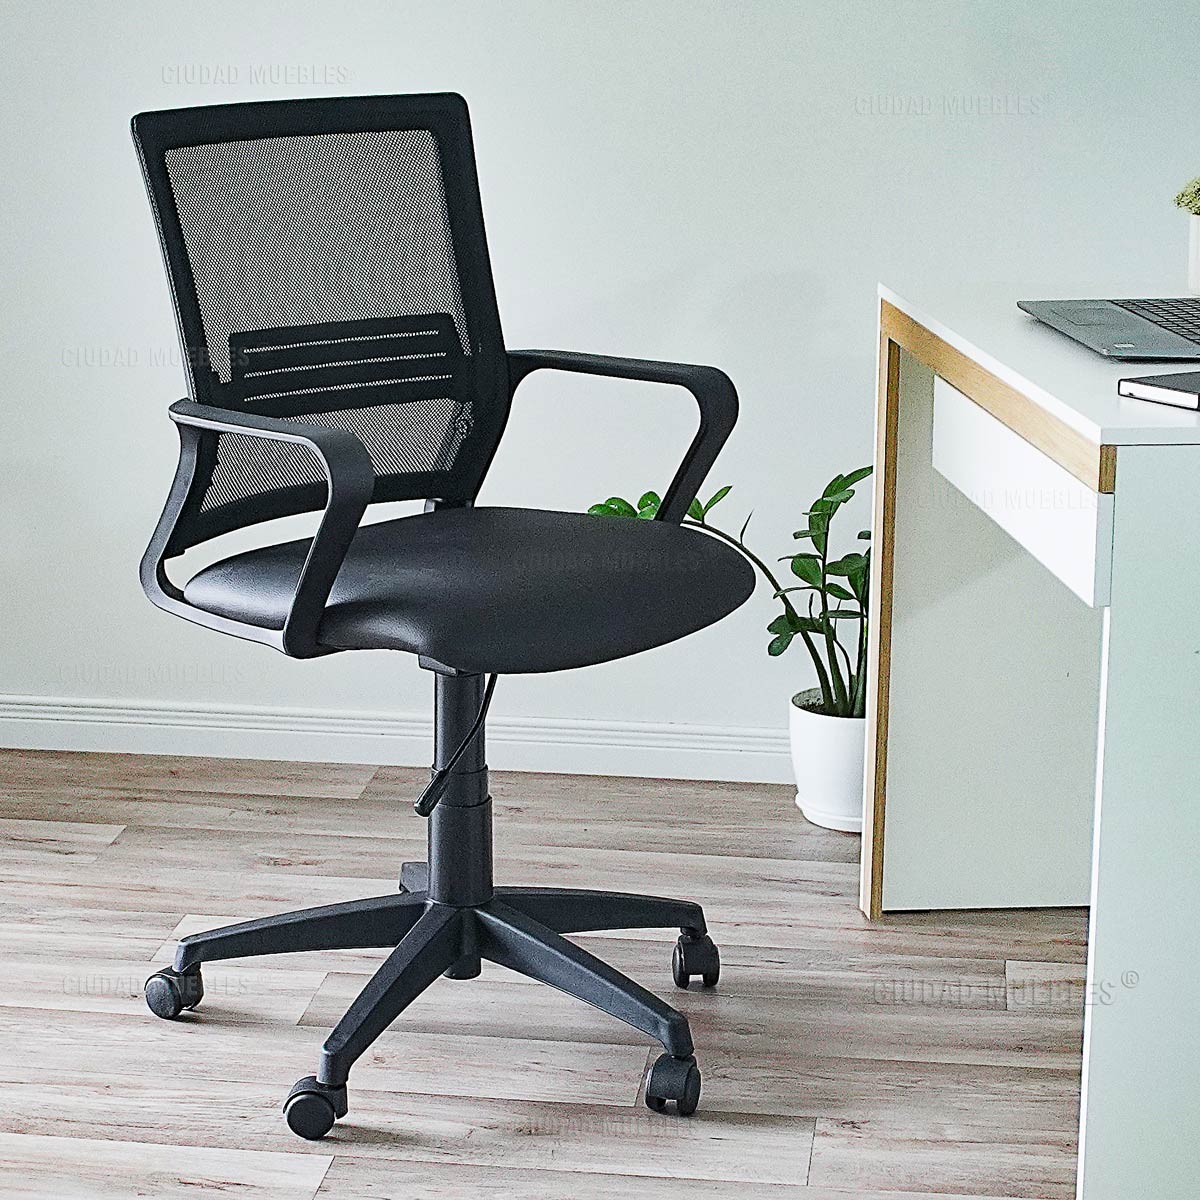 4 características ergonómicas para las sillas de oficina - Solida